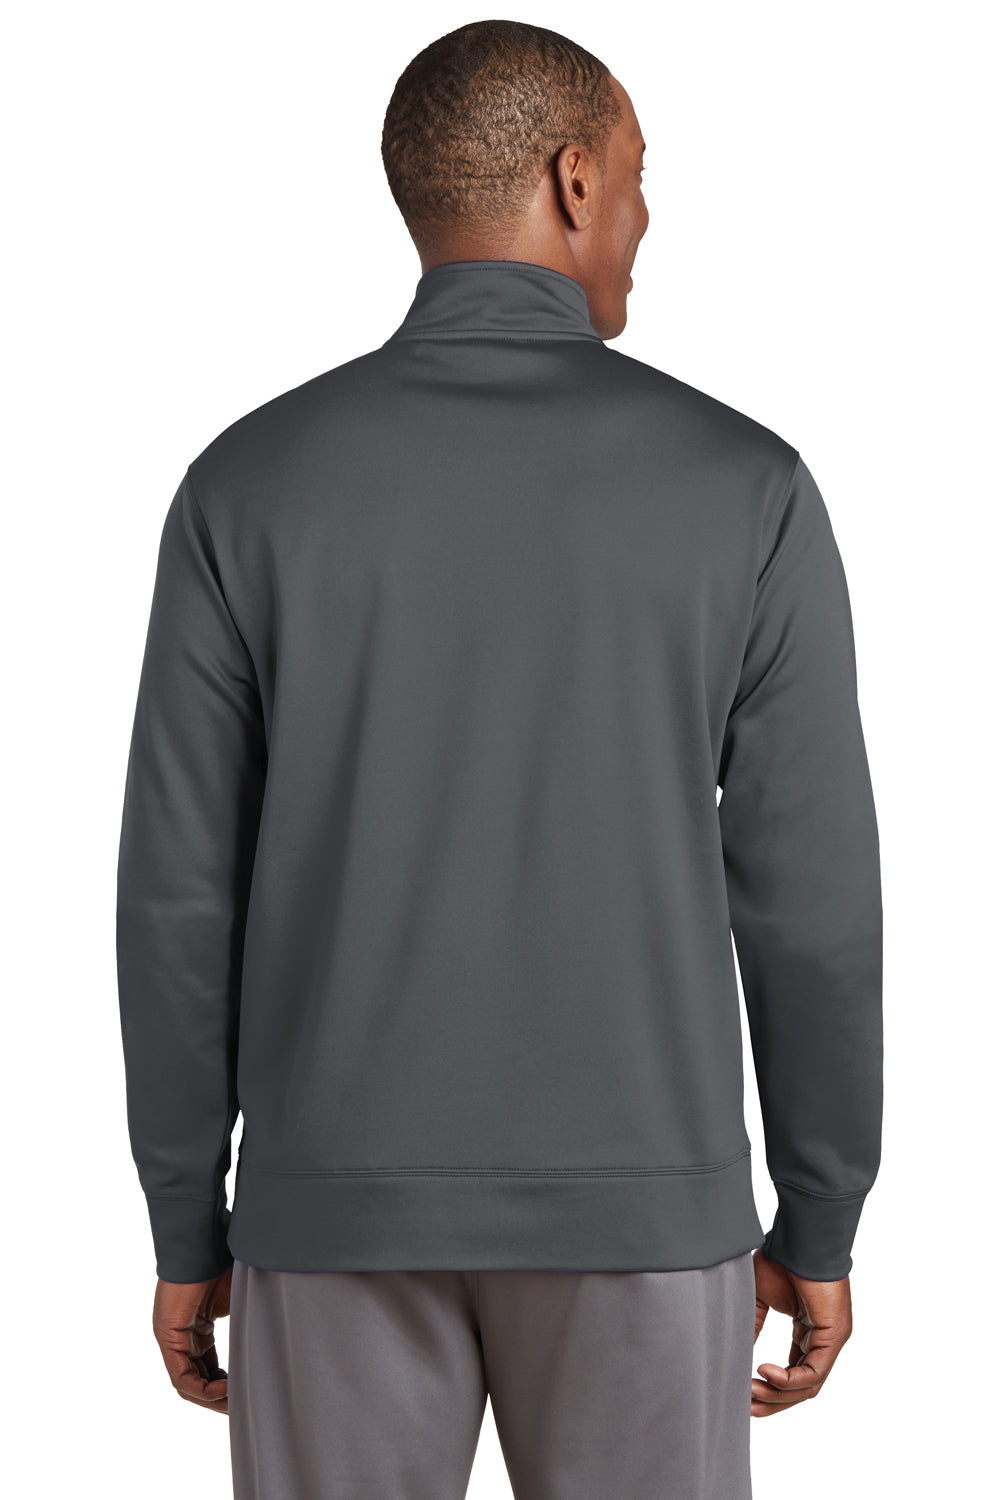 Sport-Tek ST241 Mens Sport-Wick Moisture Wicking Fleece Full Zip Sweatshirt Dark Grey Back